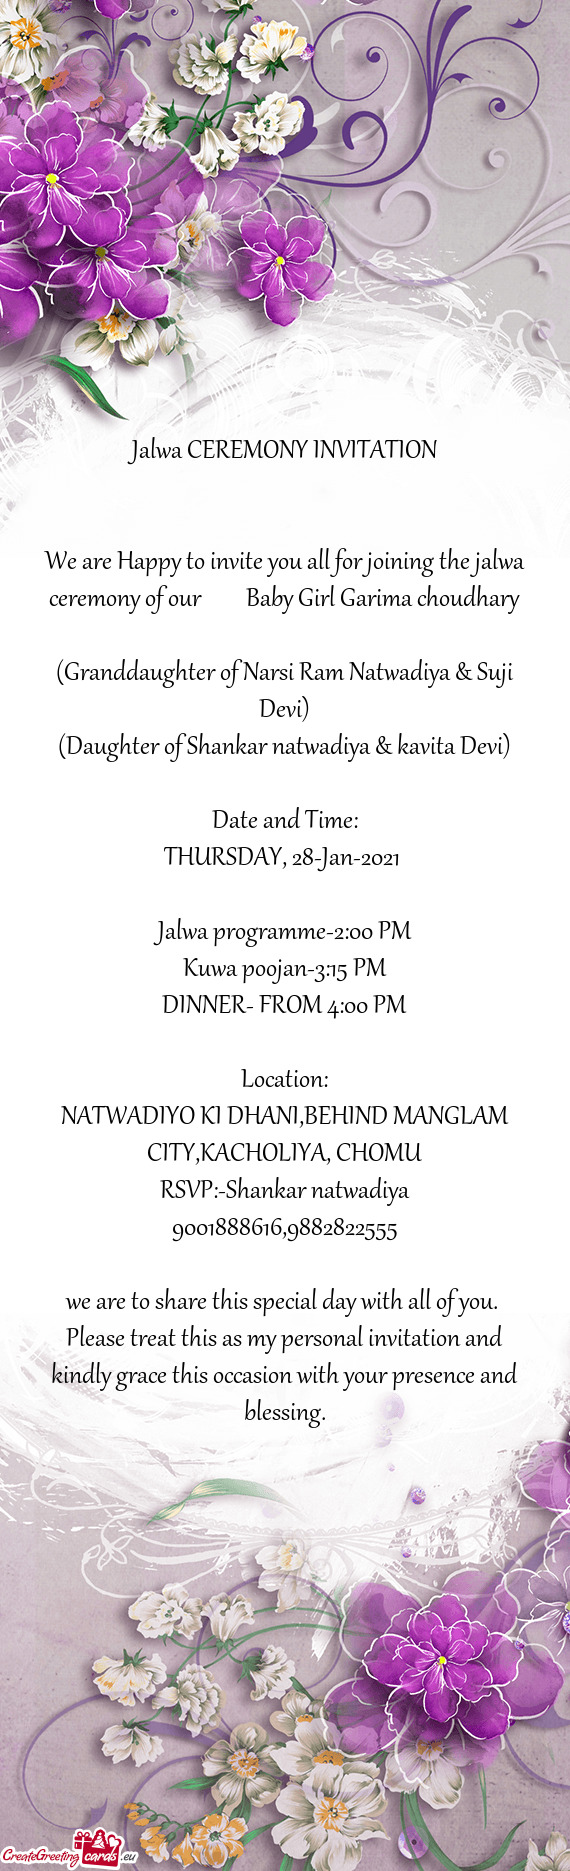 (Granddaughter of Narsi Ram Natwadiya & Suji Devi)